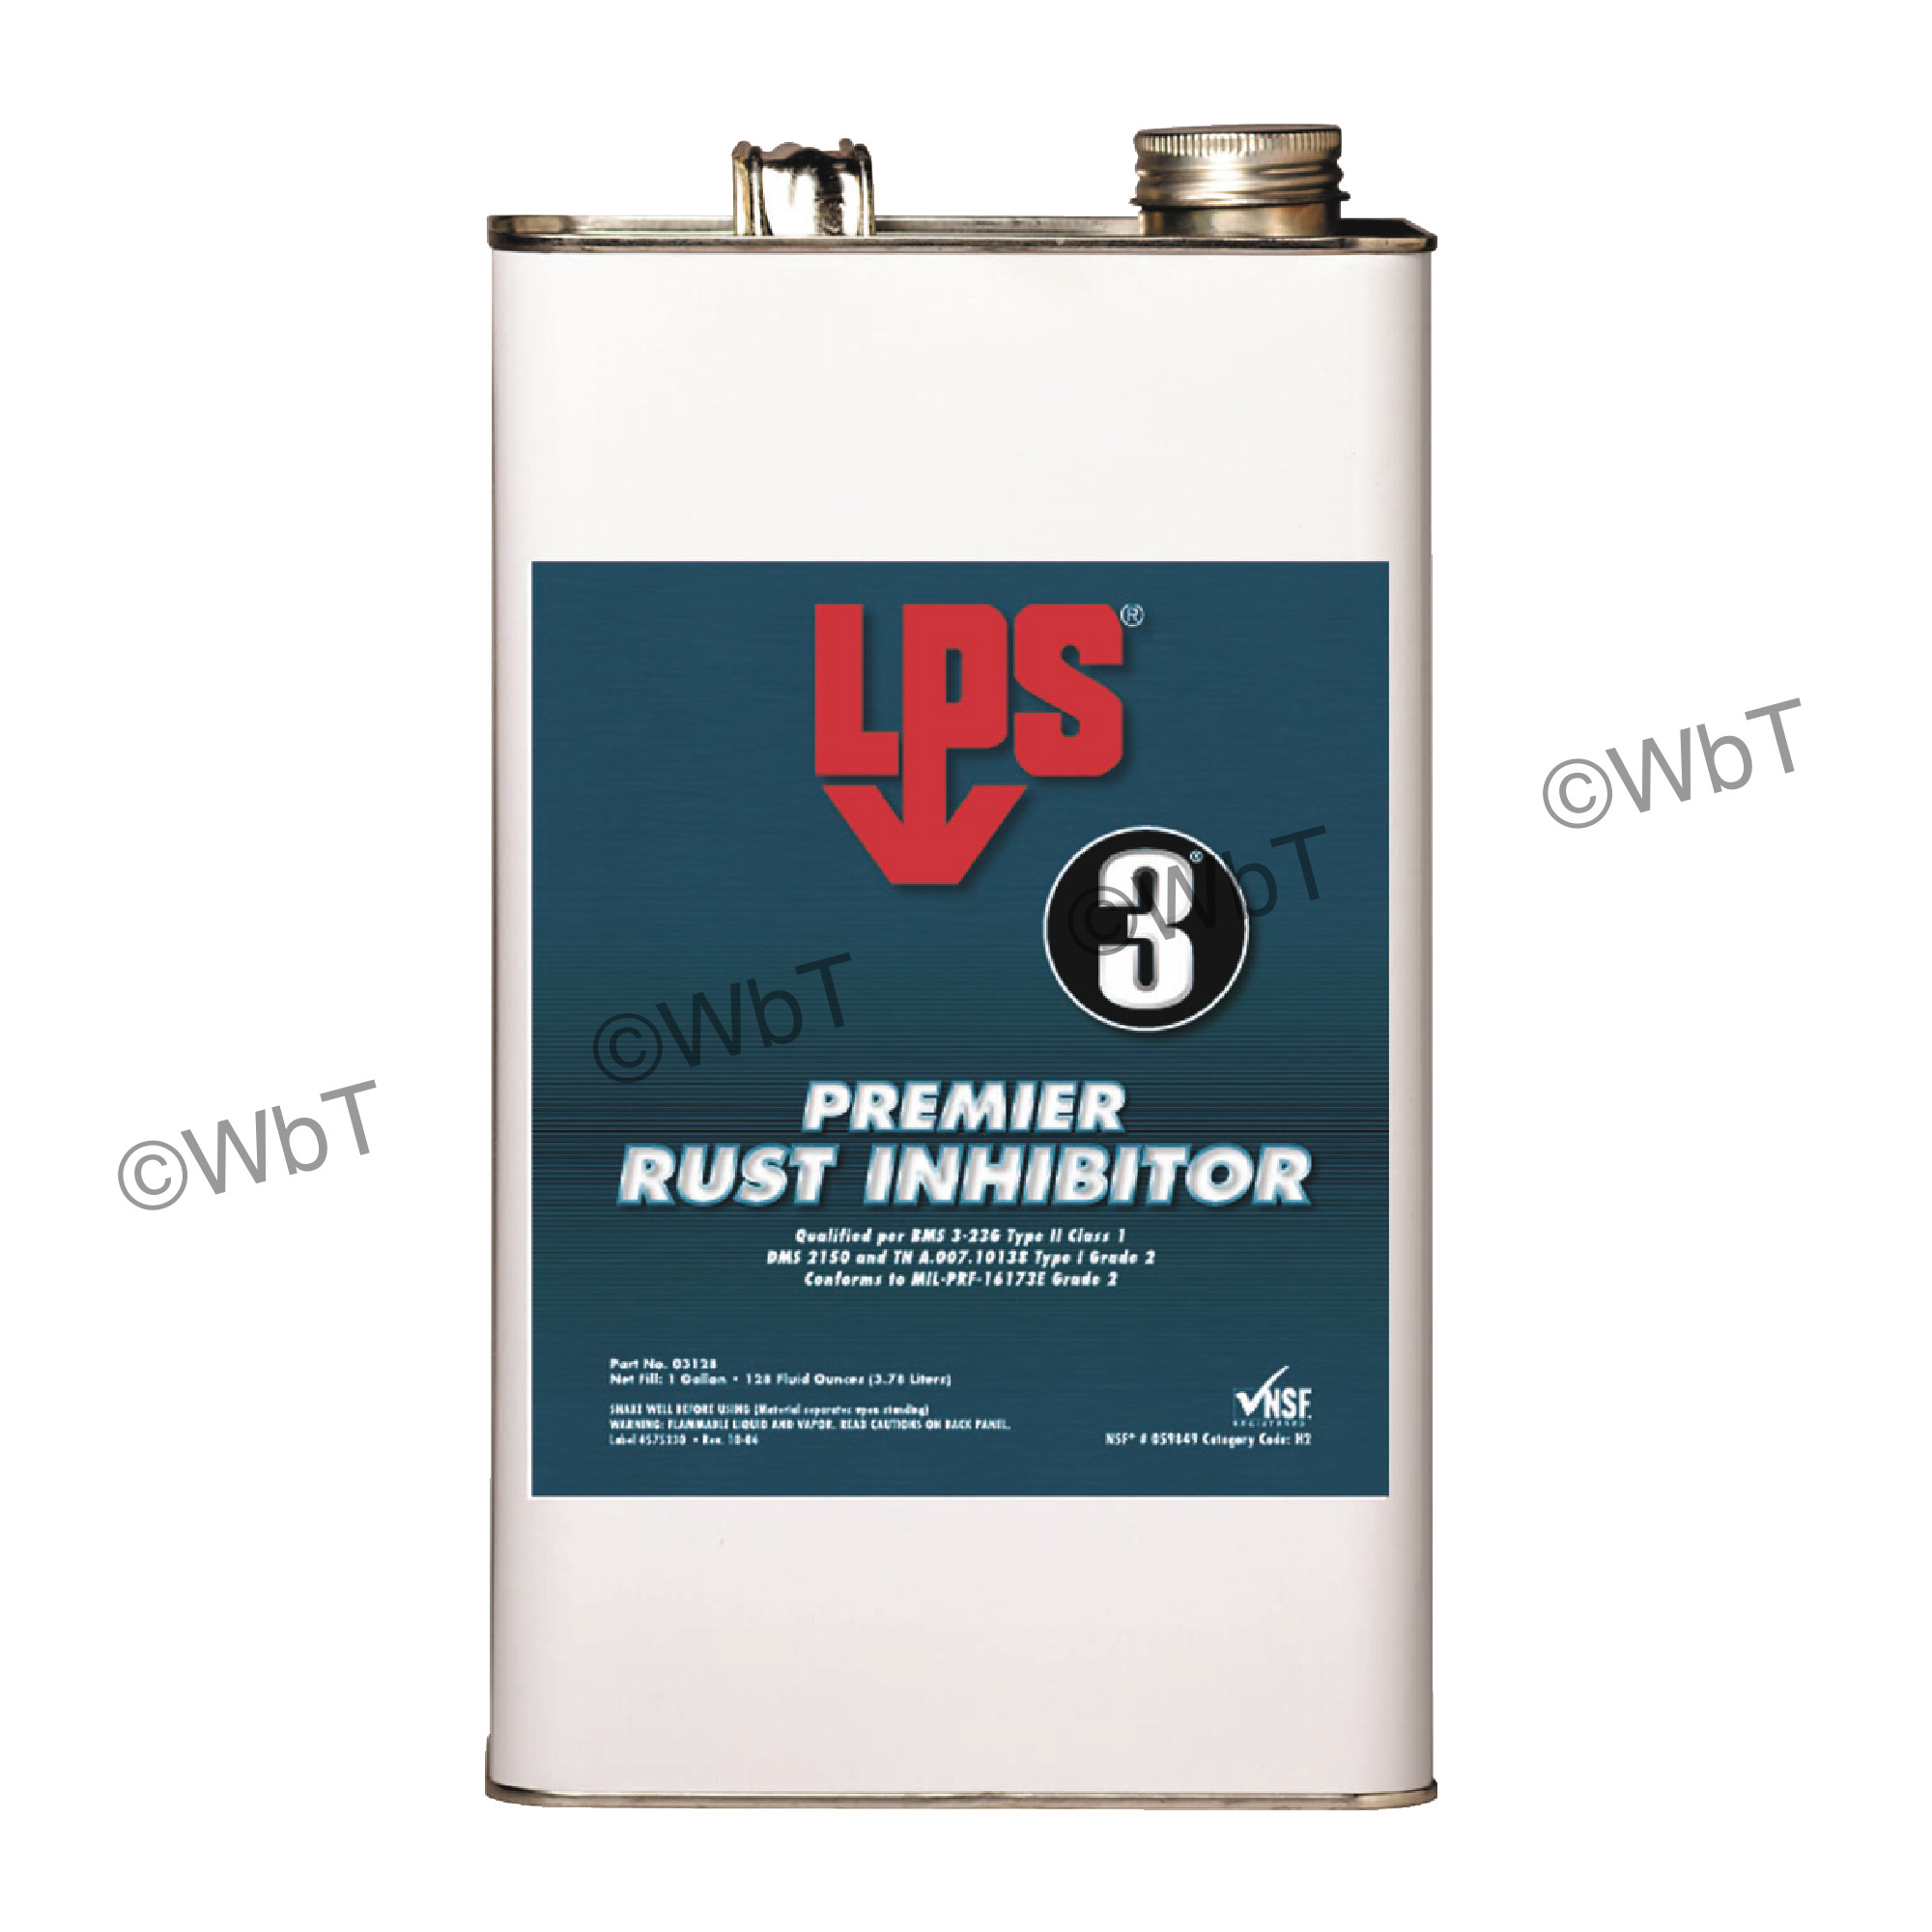 3 Heavy-Duty Rust Inhibitor